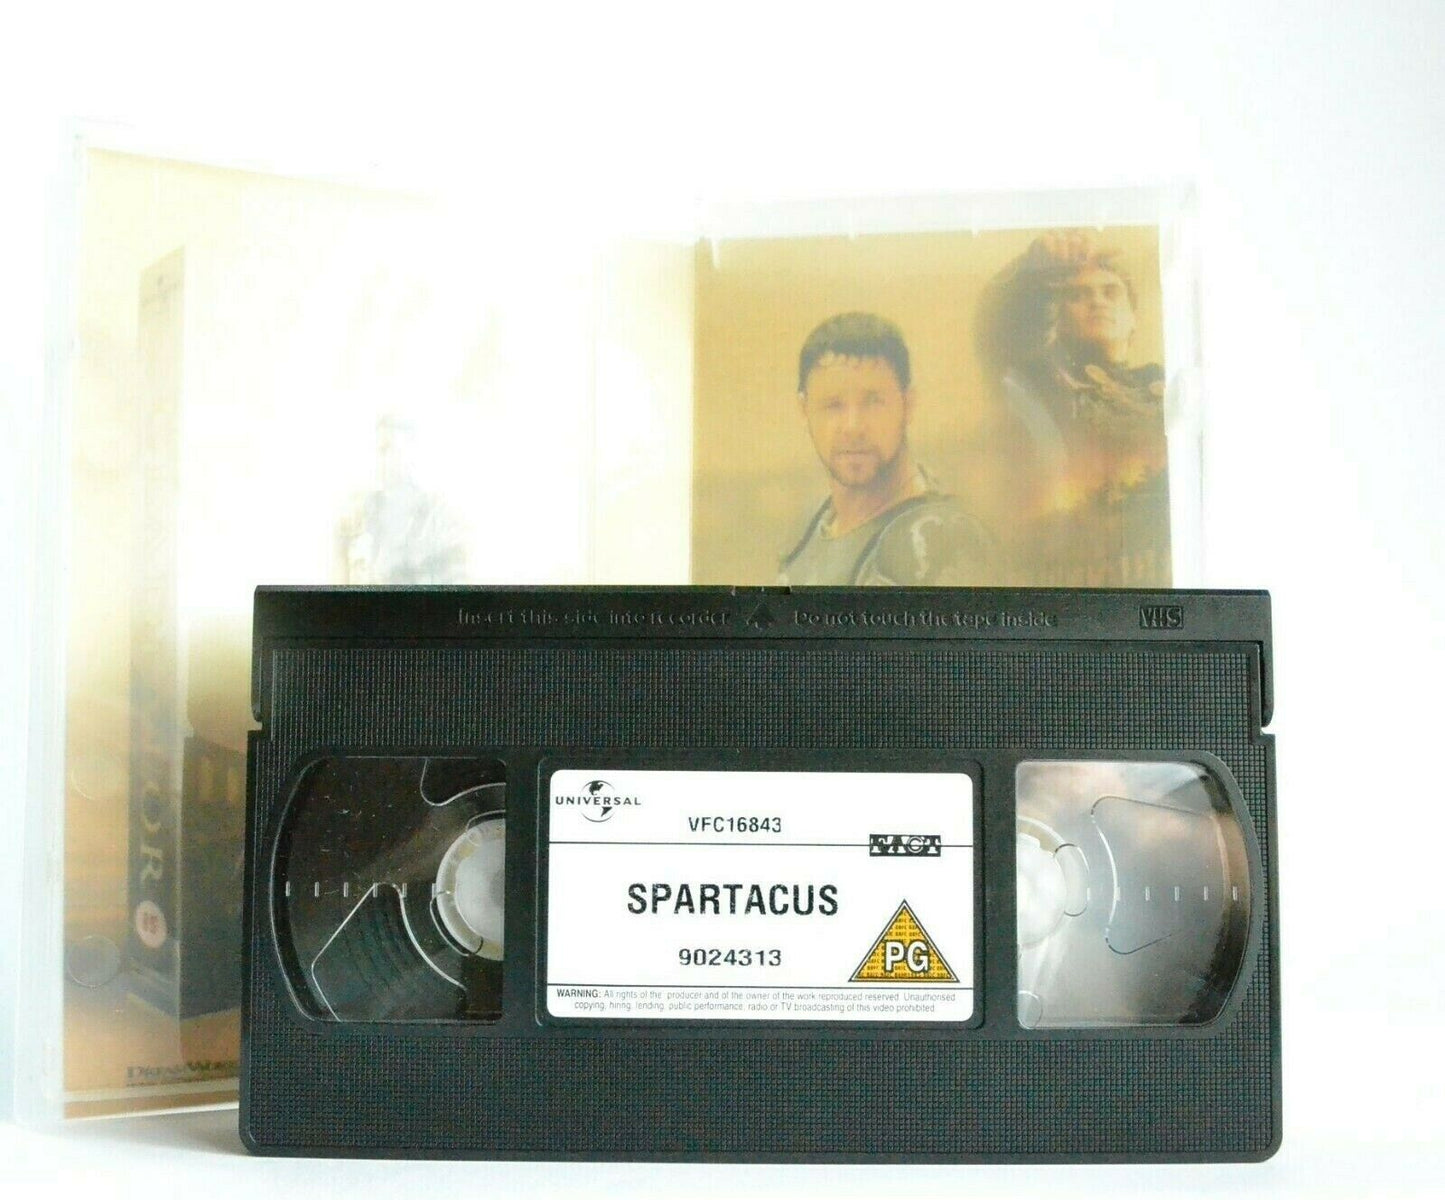 Spartacus: Uncut And Fully Restored - Stanley Kubrick Film - Kirk Douglas - VHS-